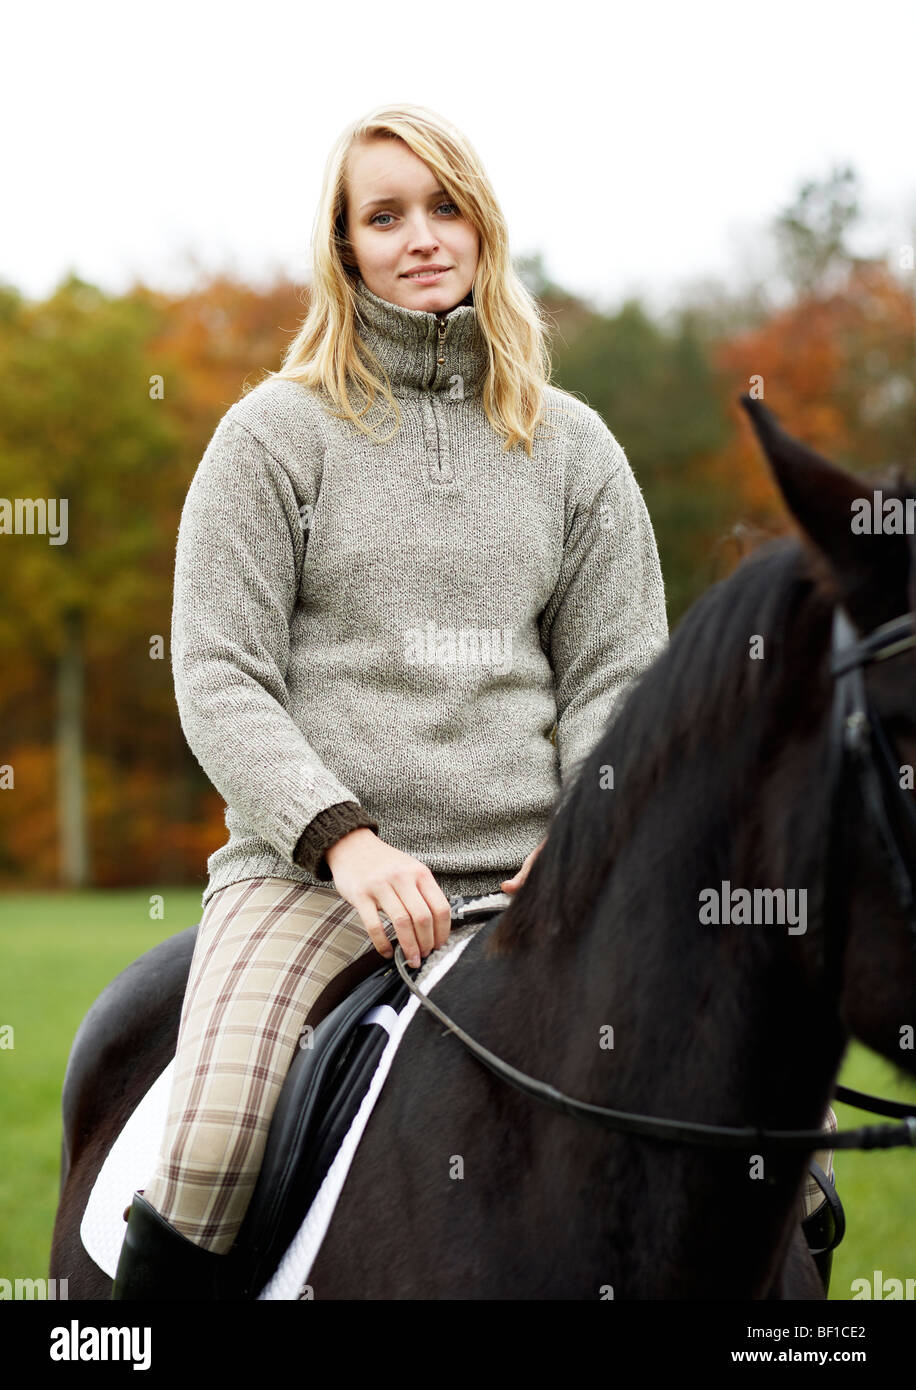 Señora montando un caballo fotografías e imágenes de alta resolución -  Página 3 - Alamy